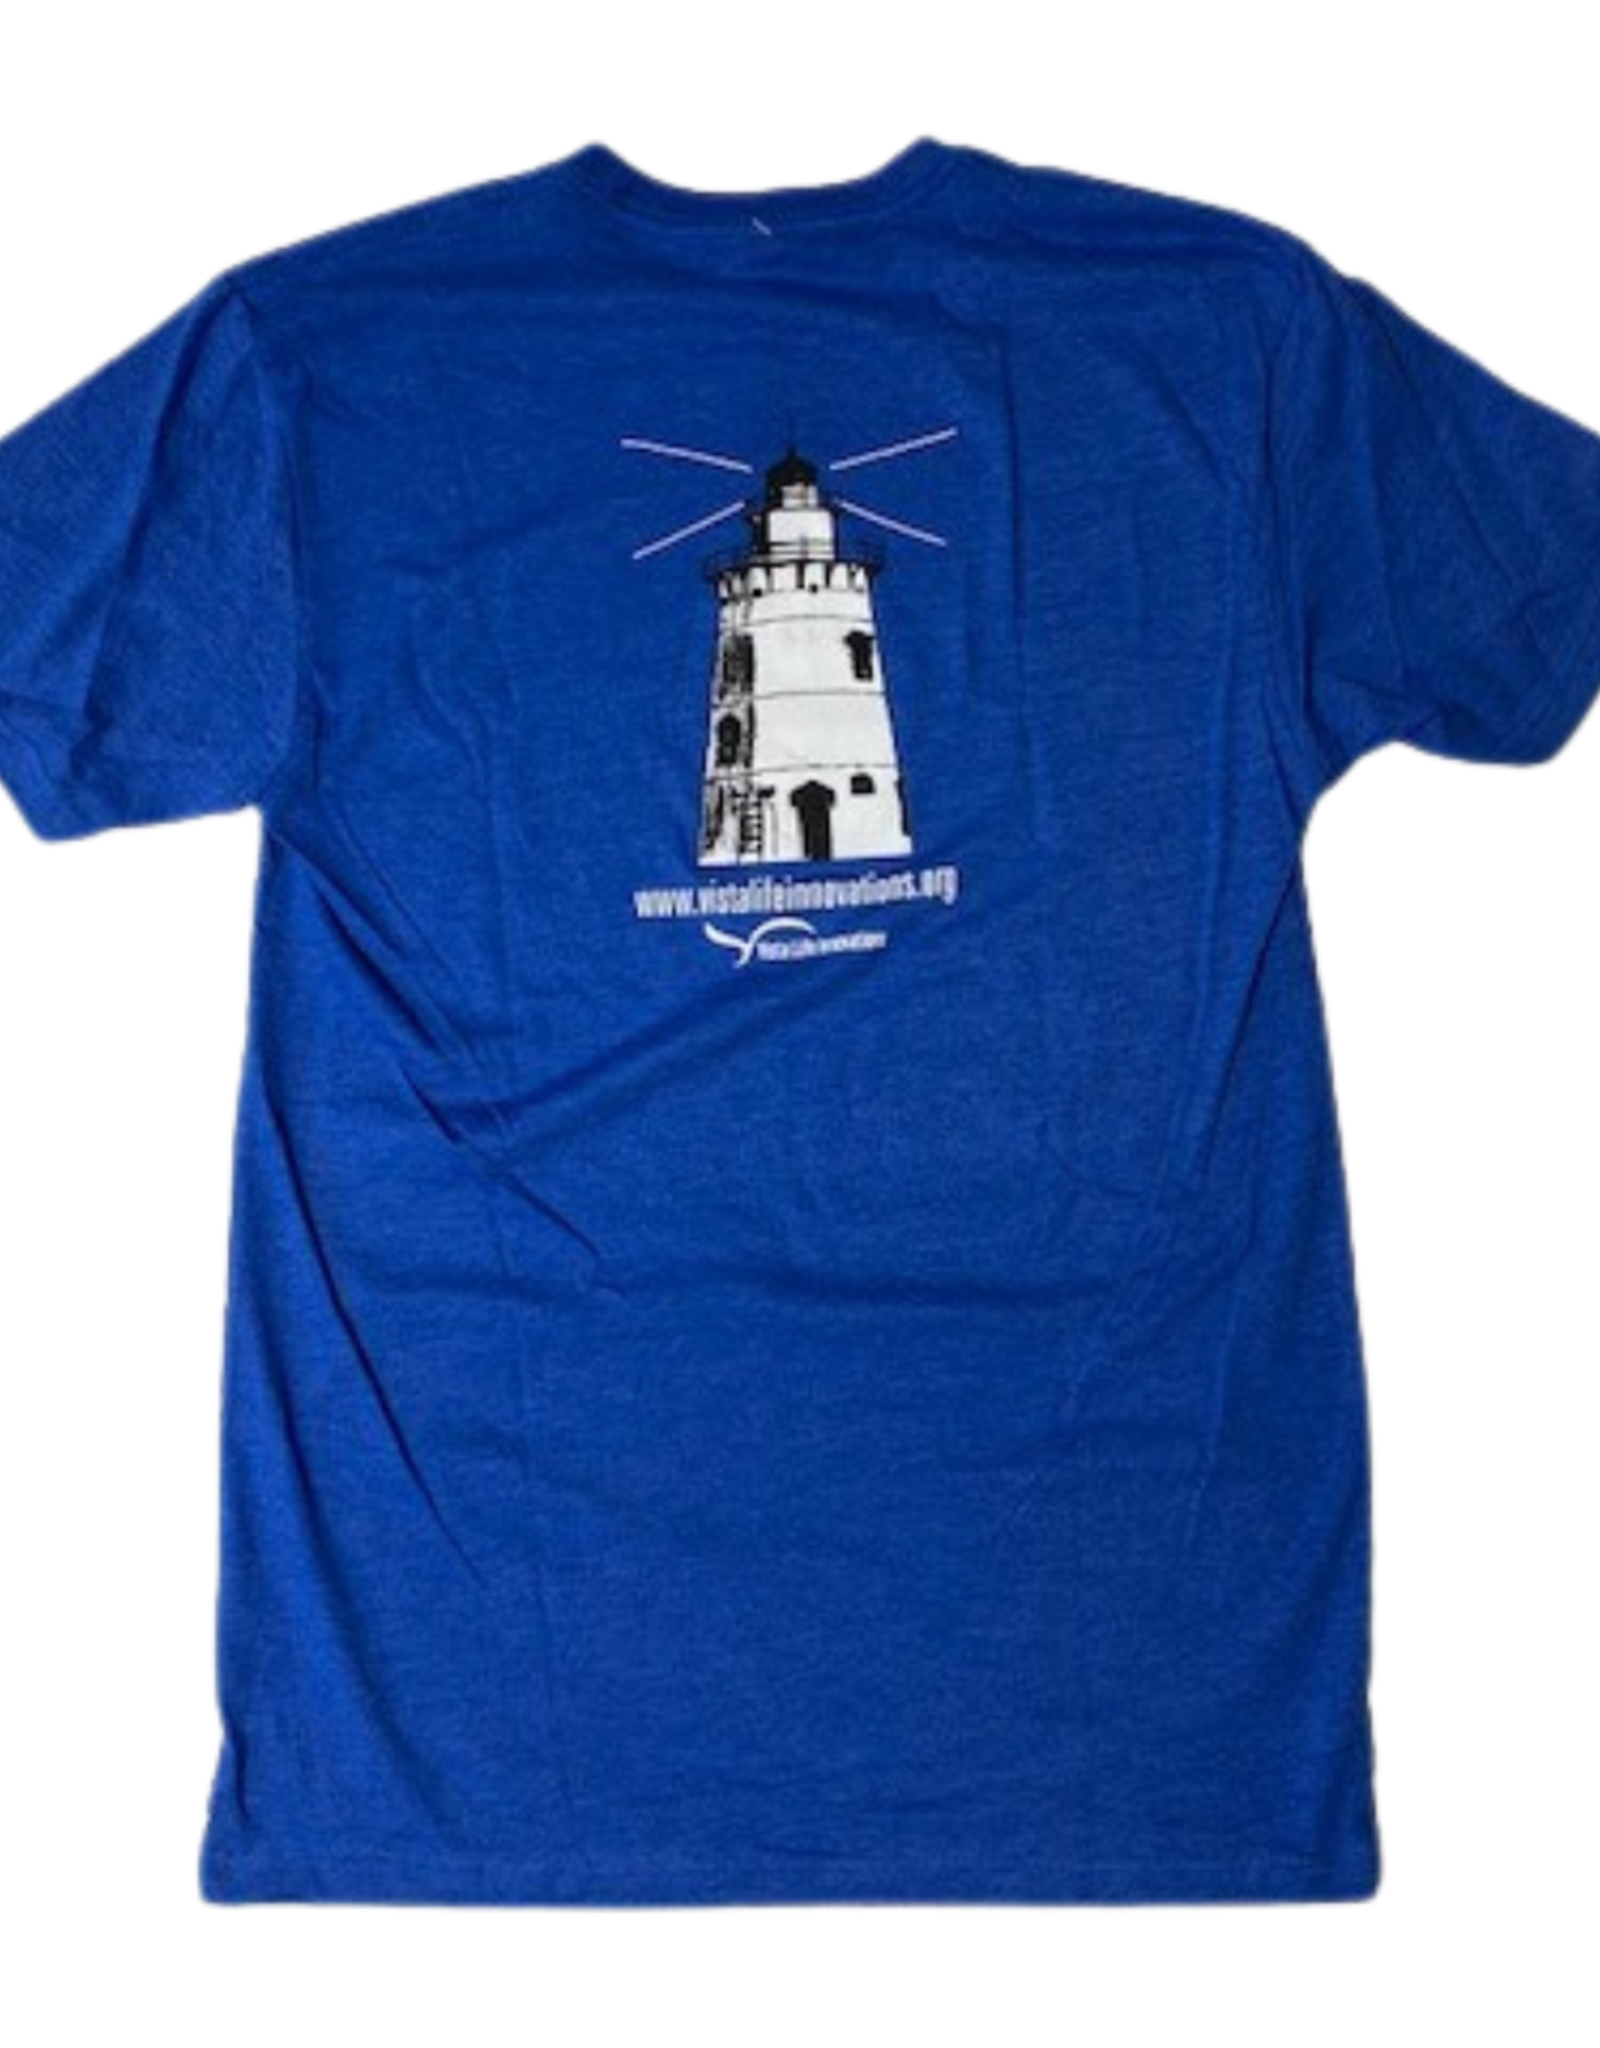 Vista Life Believer Lighthouse Men's Crew Neck SS t-shirt in Royal Blue